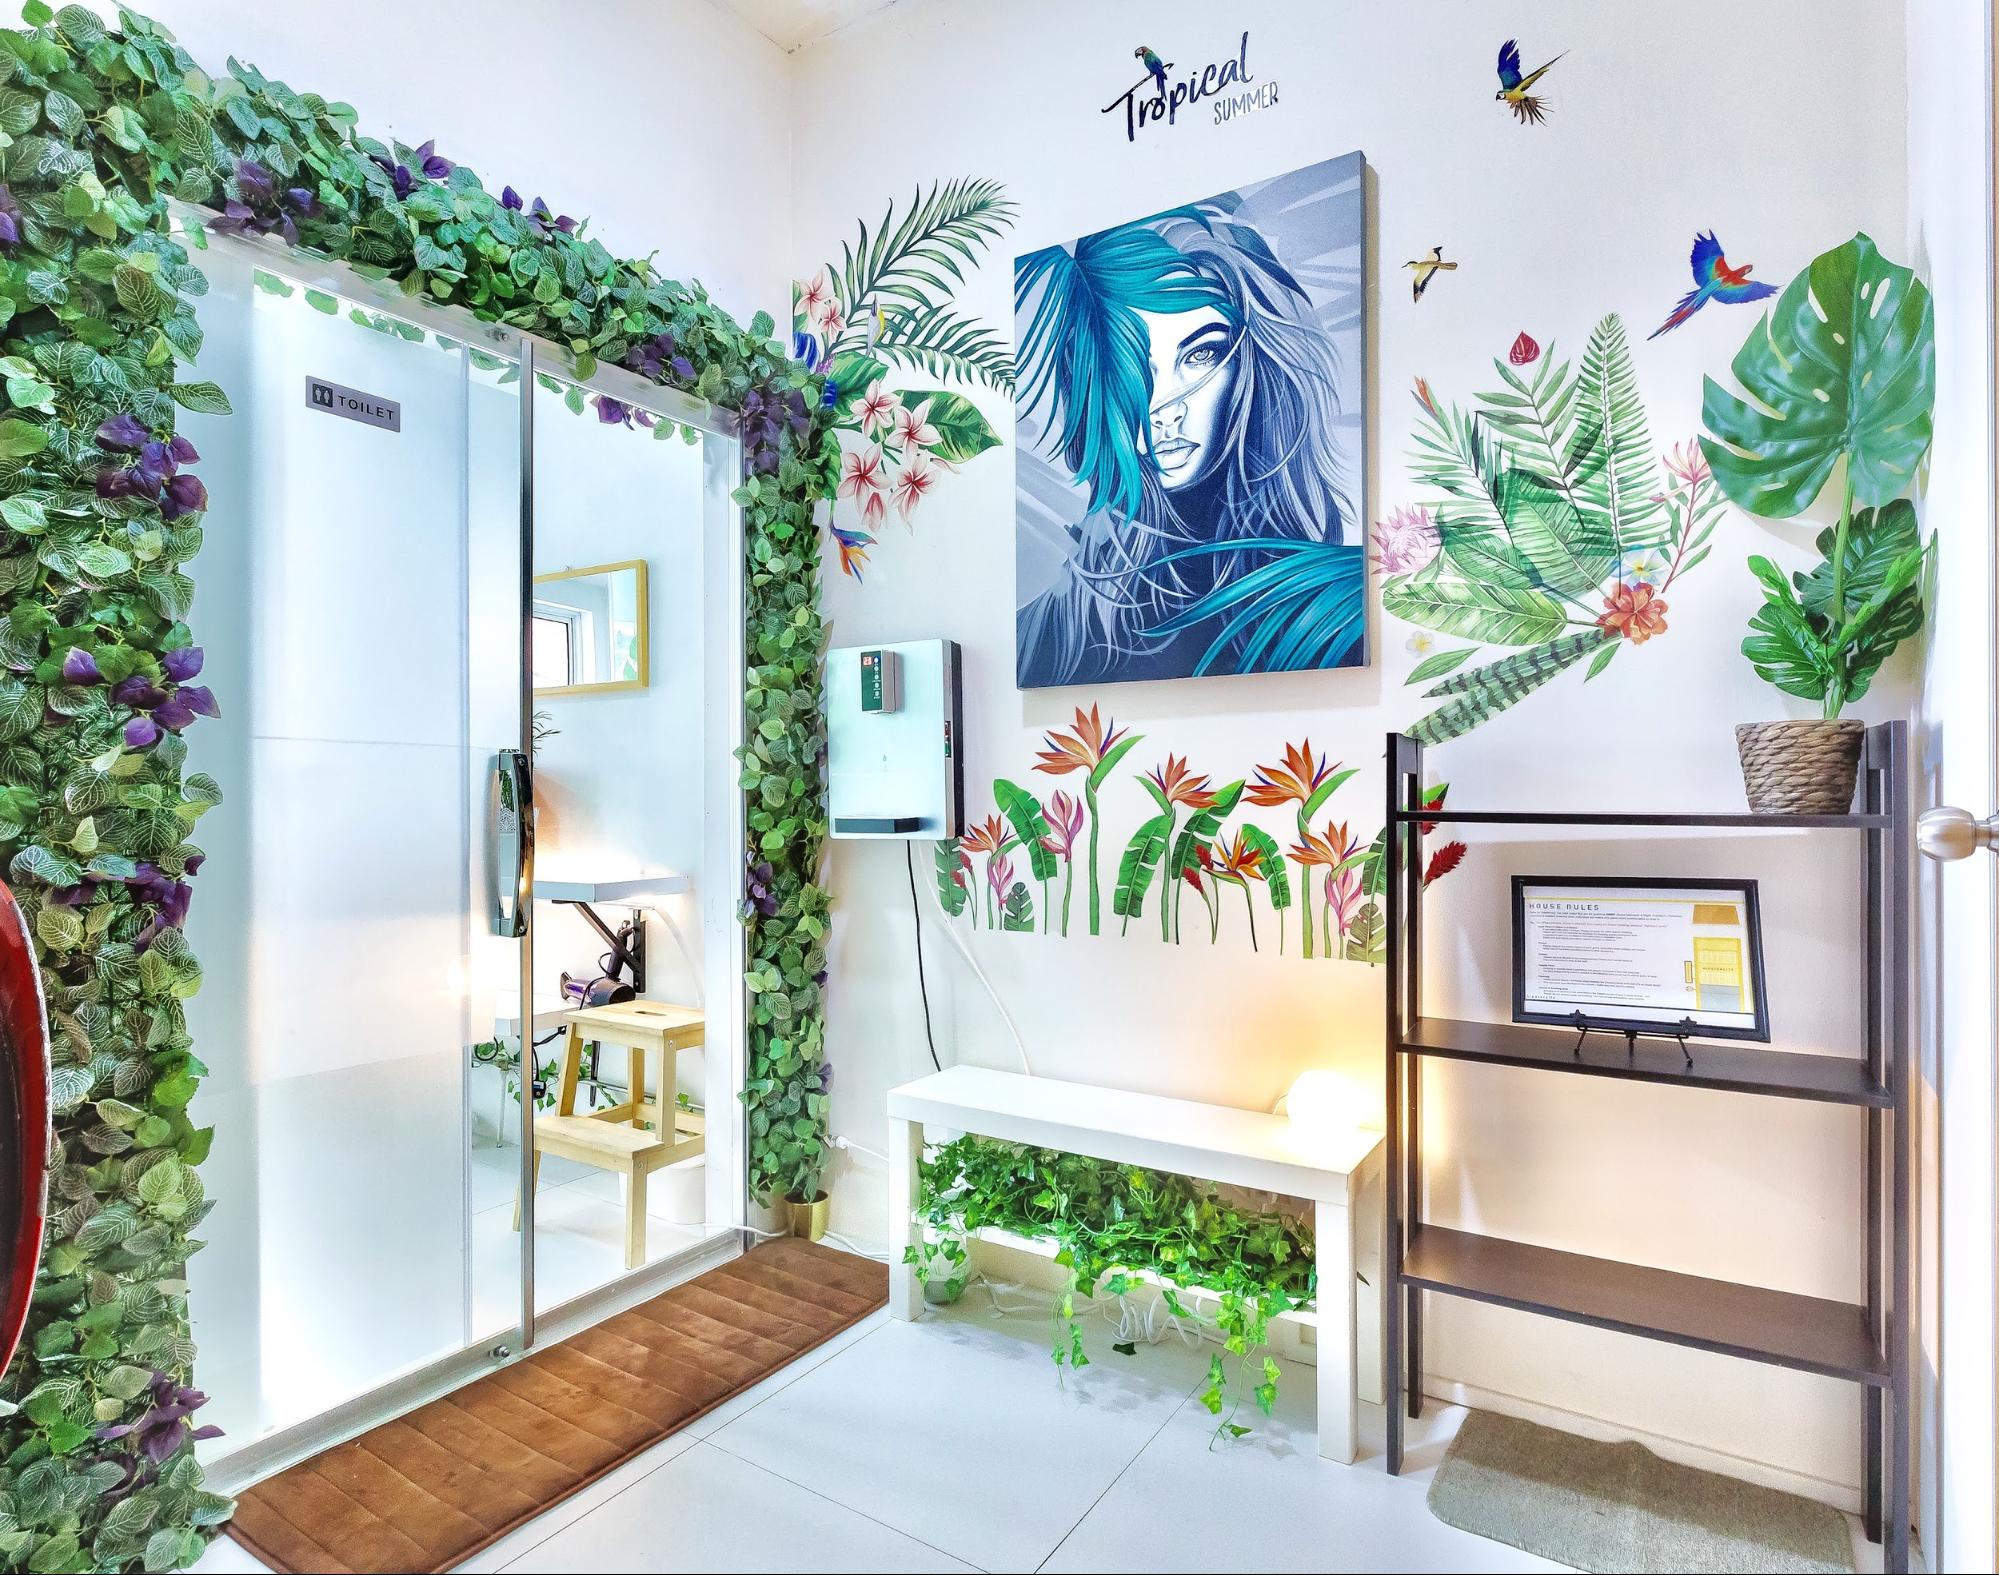 Hipstercity 厕所内饰-新加坡经济型旅馆